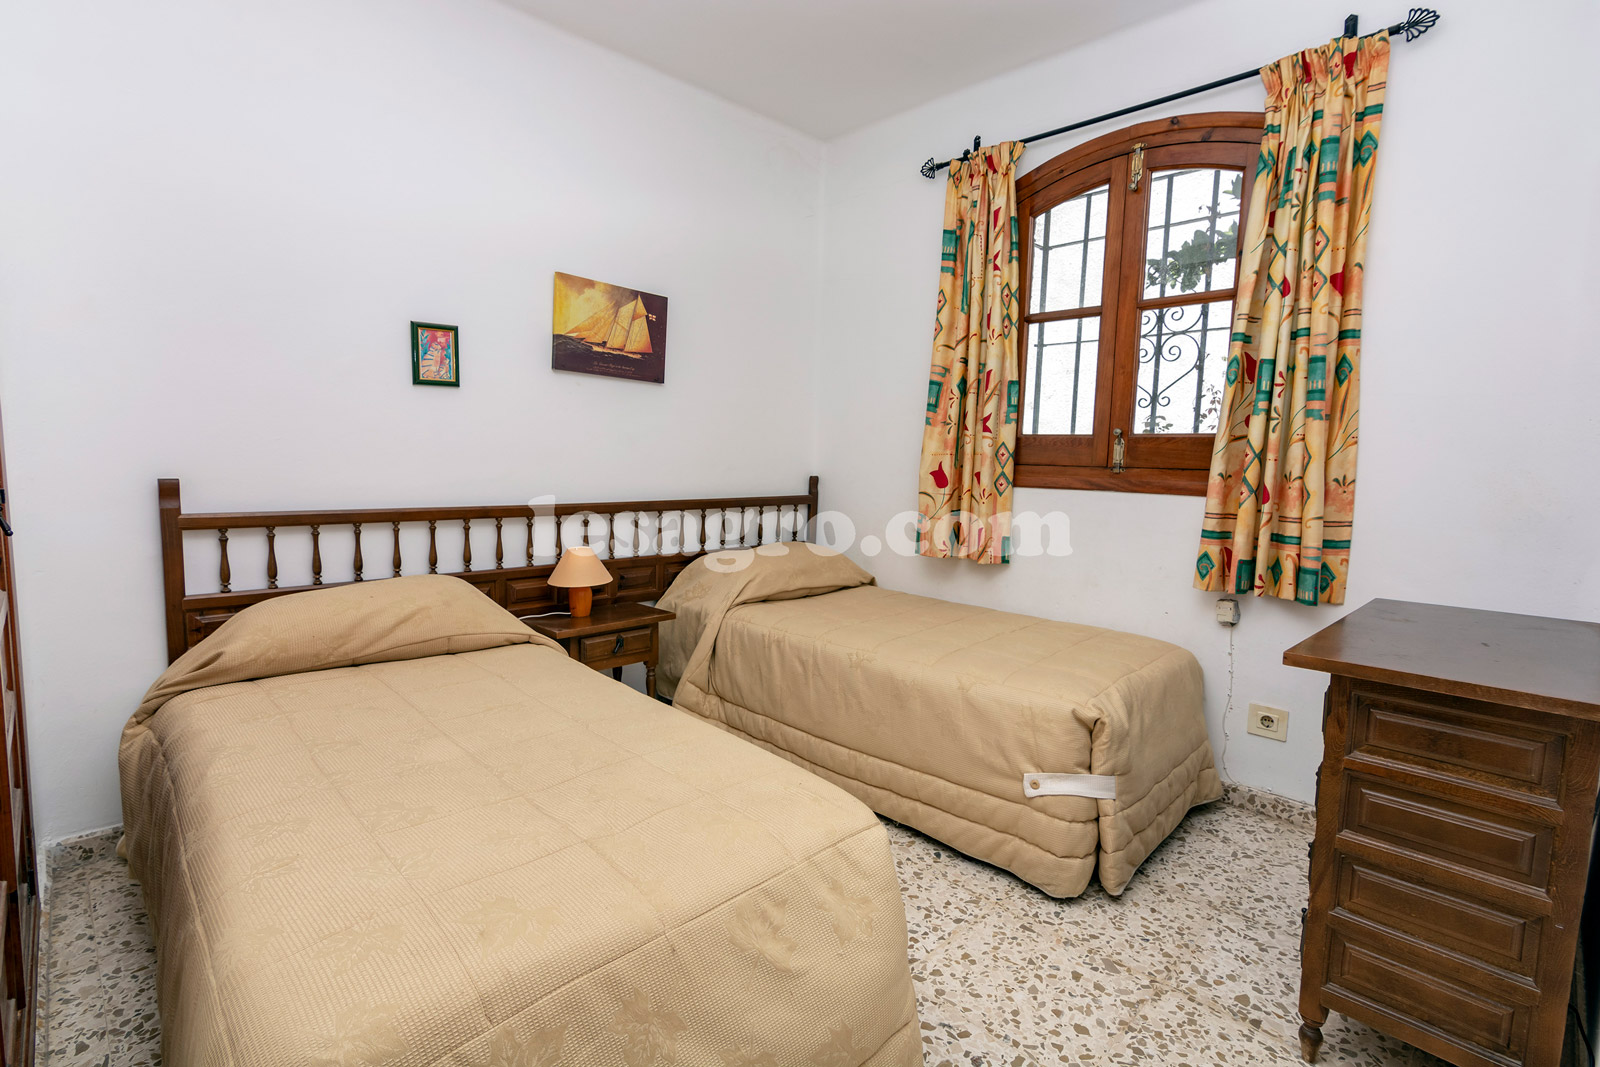 Lovely two bedroomed villa for sale in San Juan de Capistrano.